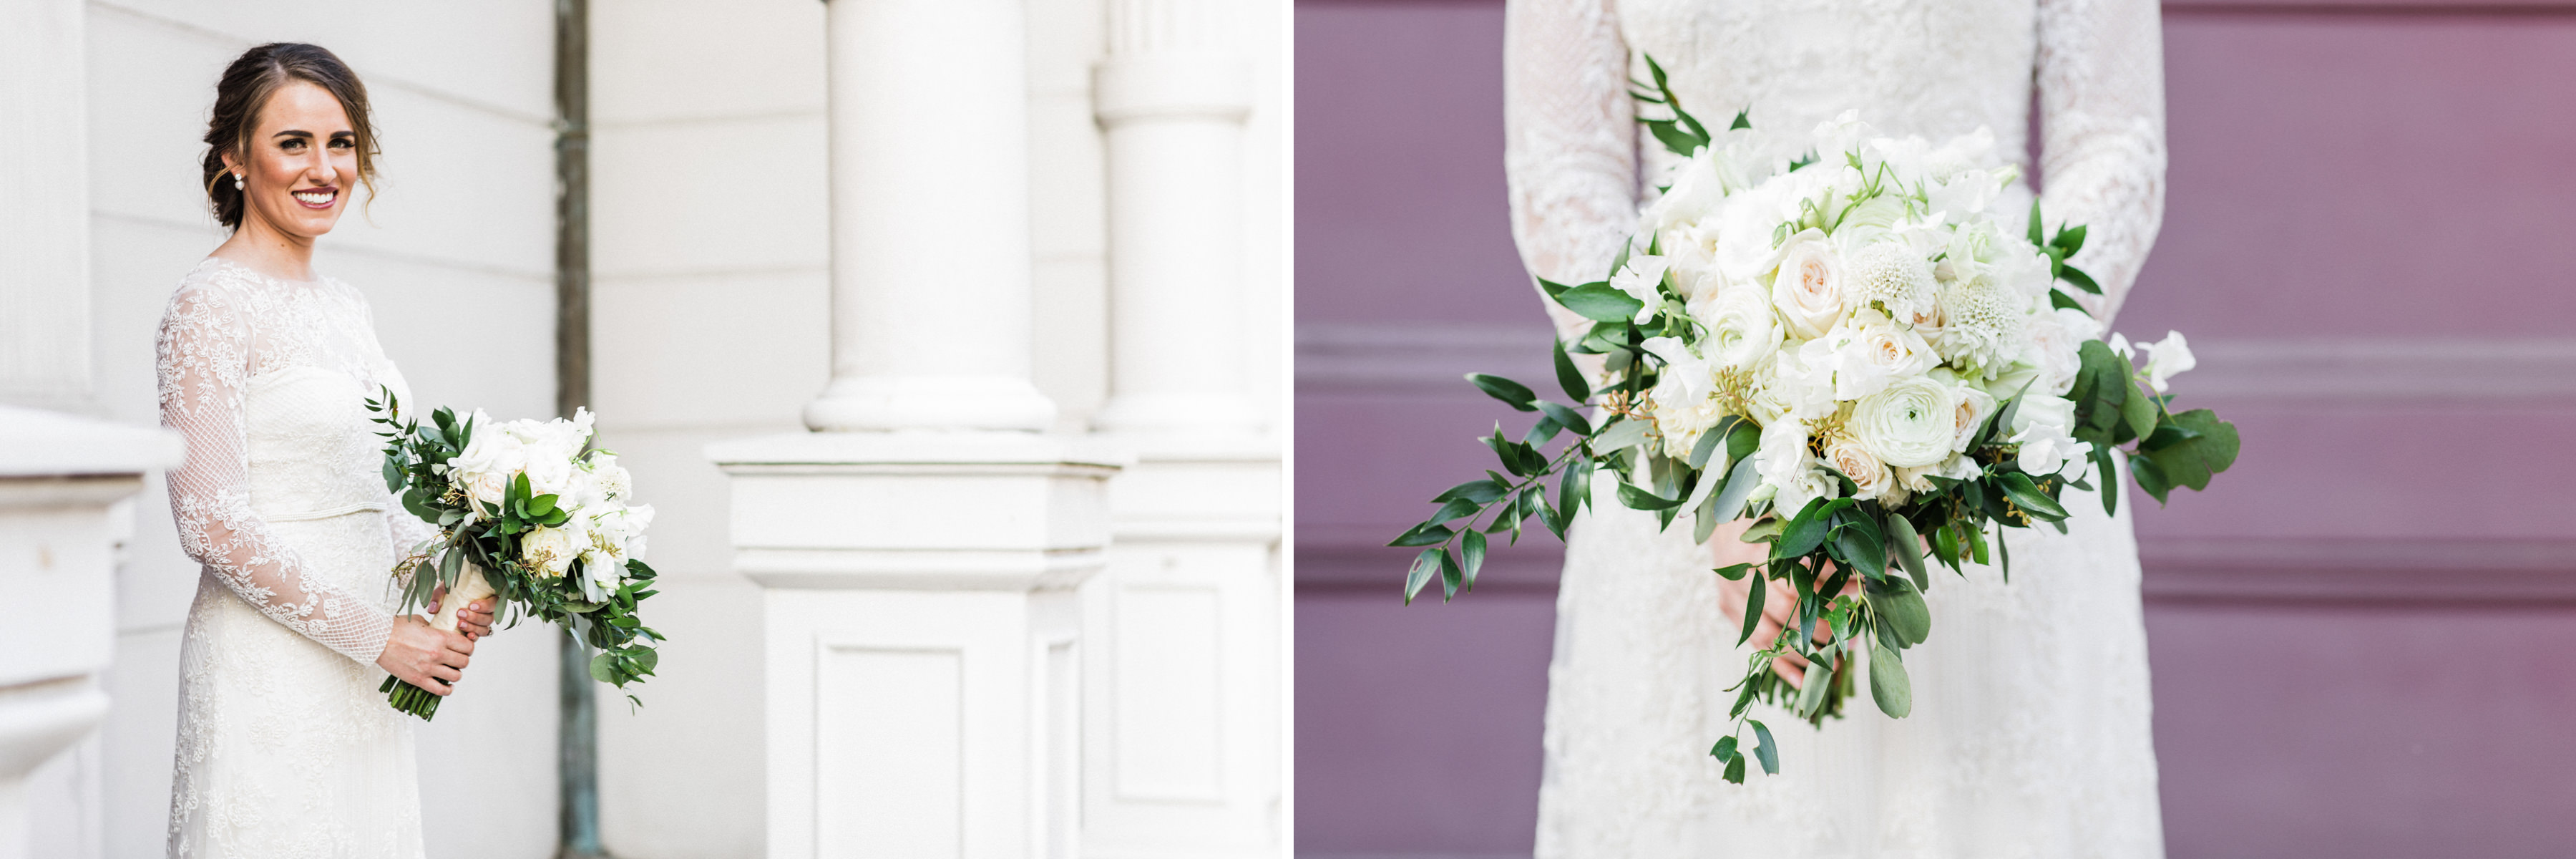 MULLET_WEDDING_NEW_ORLEANS_LOUISIANA_WEDDING_PHOTOGRAPHY_53